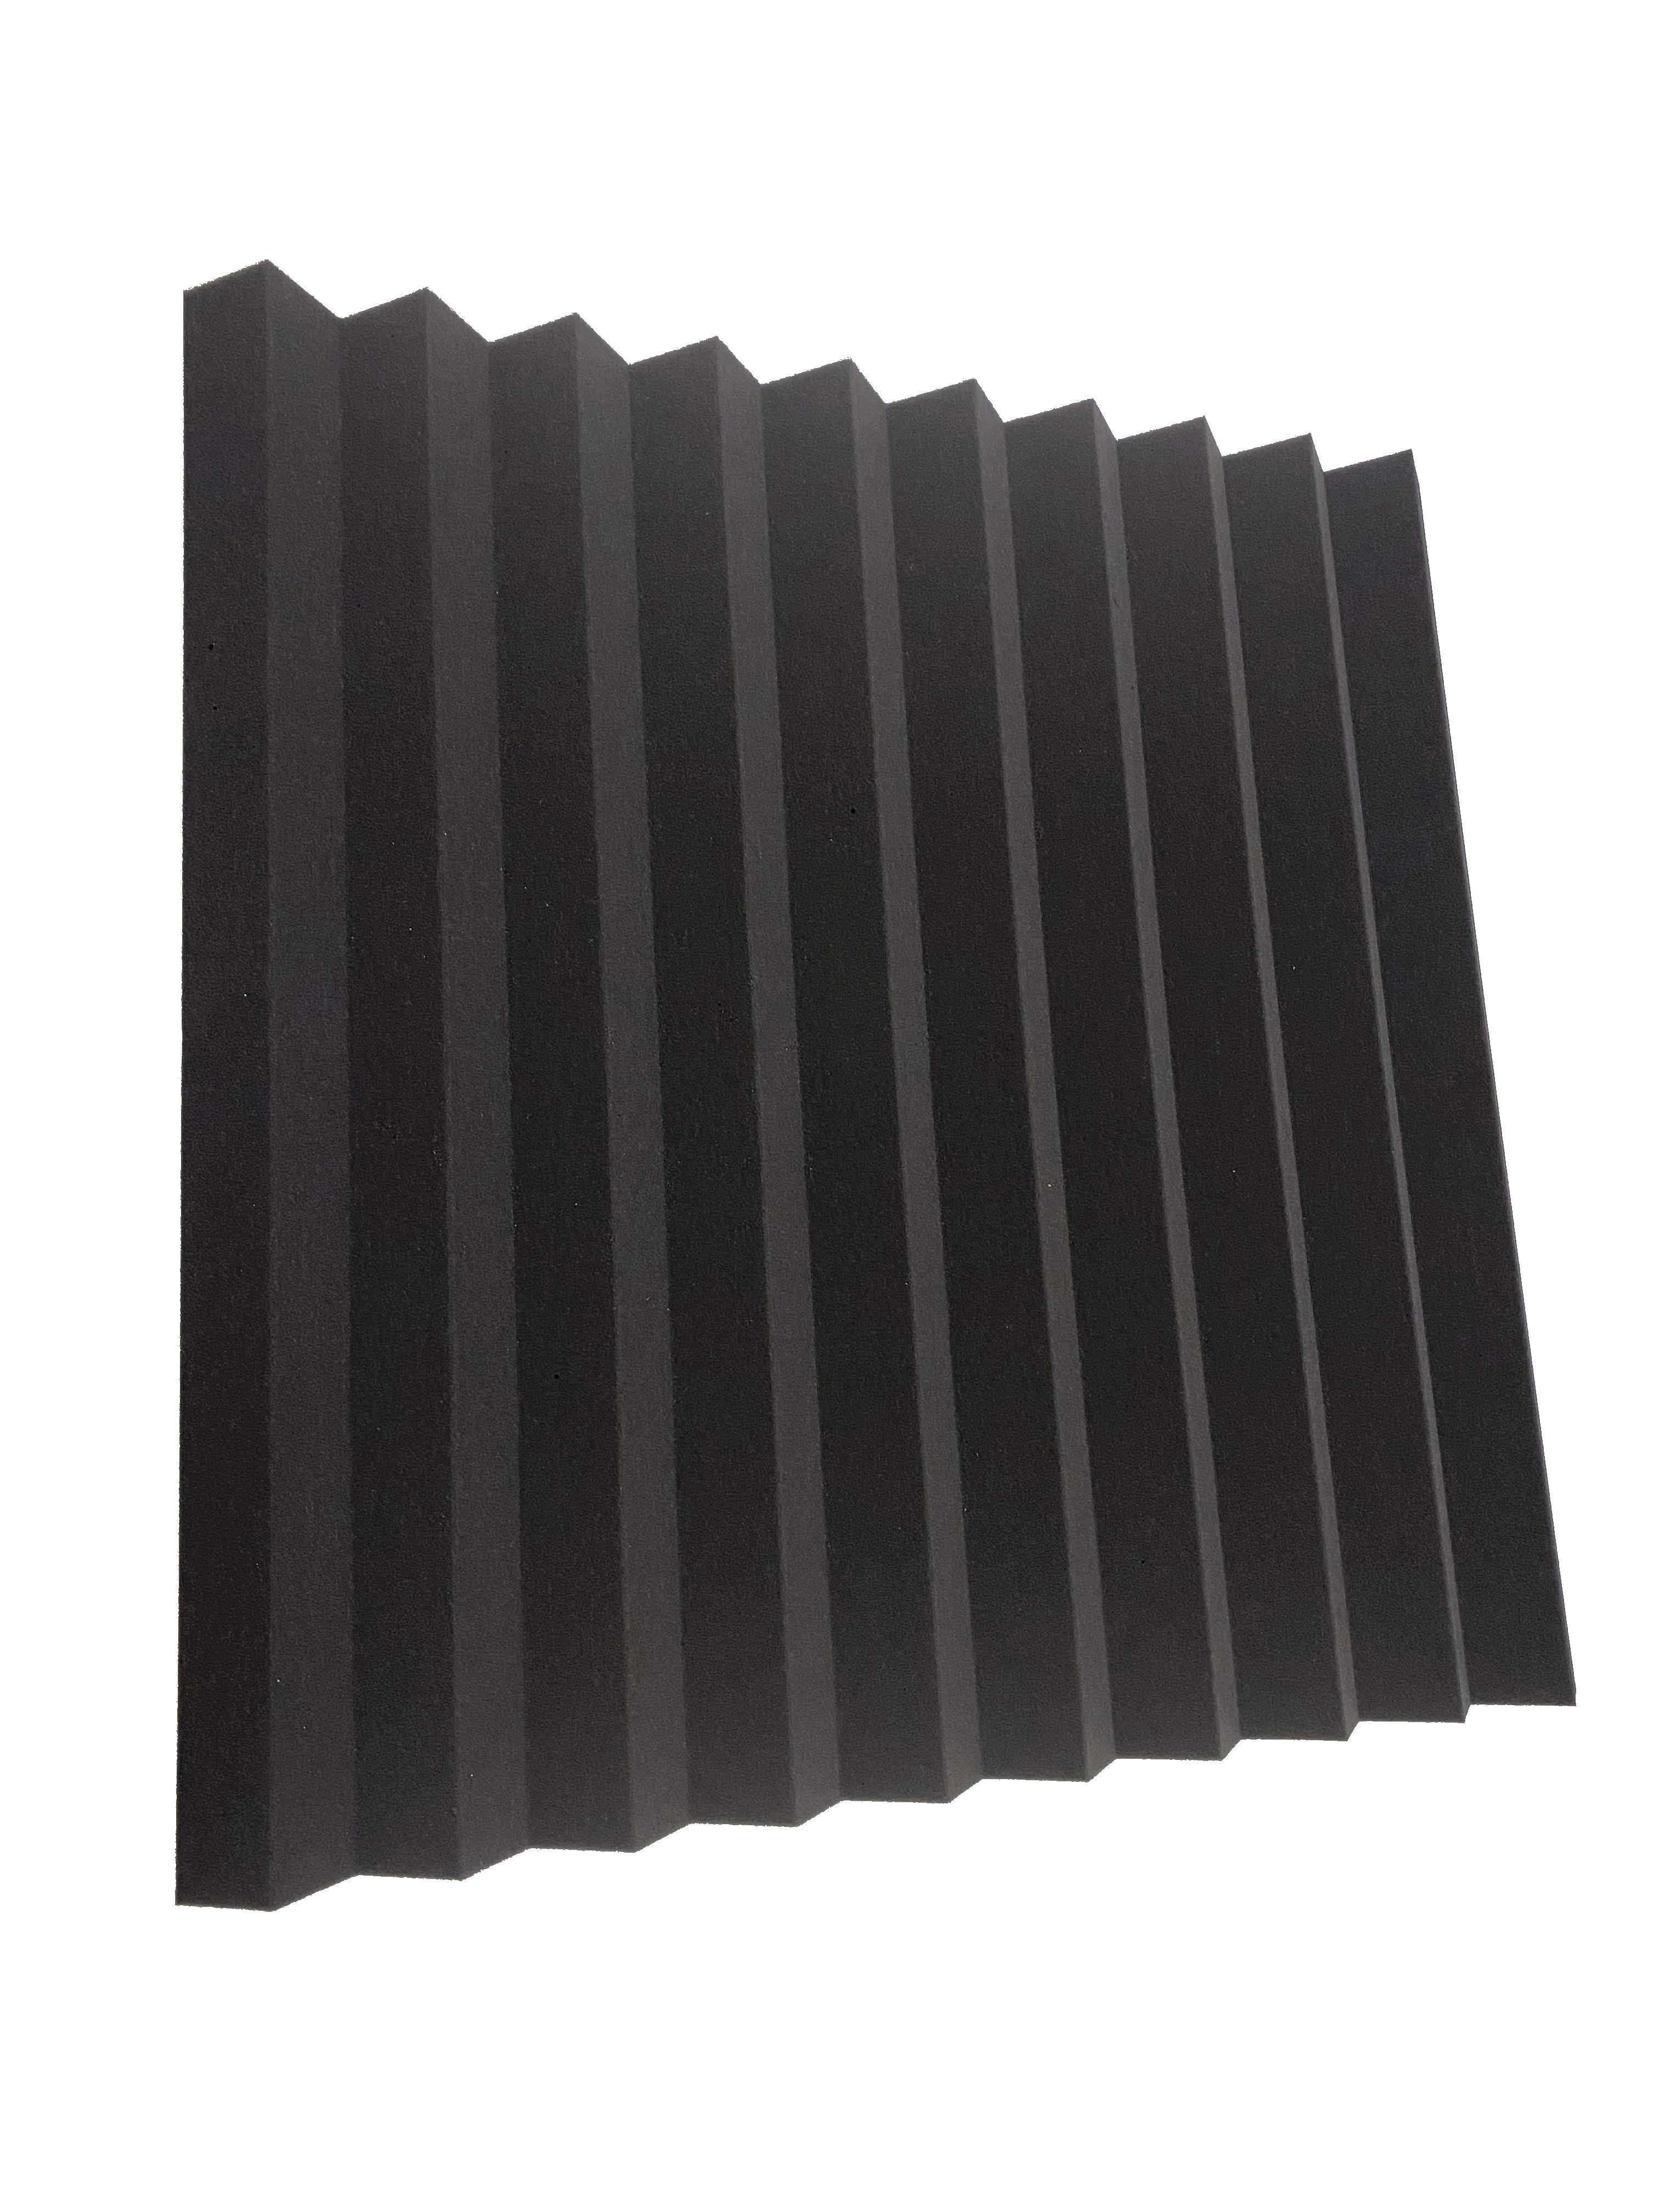 Buy dark-grey Wedge PRO 30&quot; Acoustic Studio Foam Tile Kit